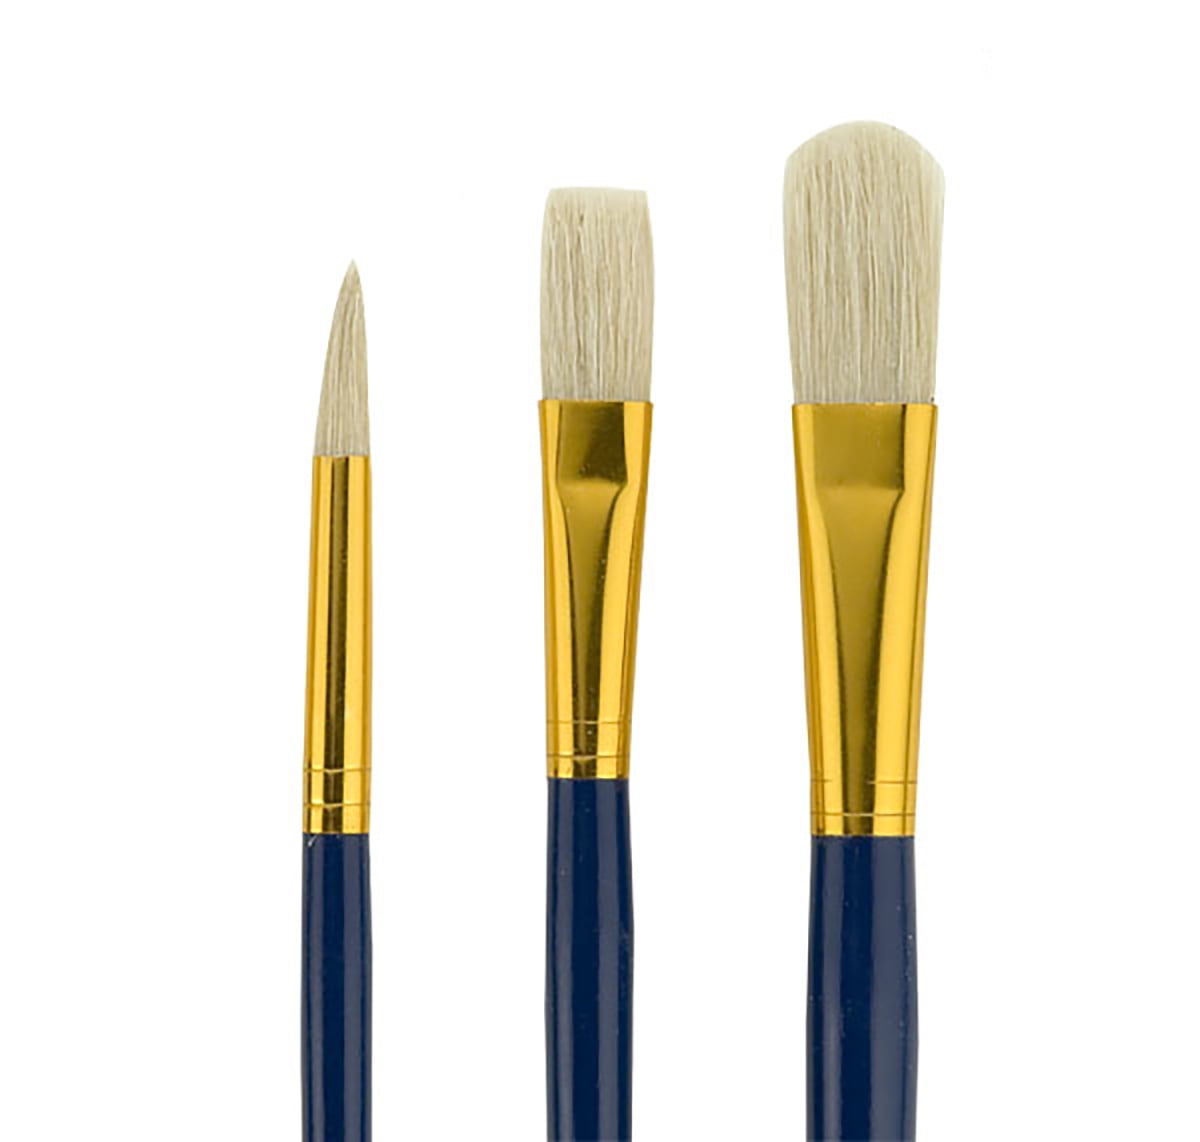 Fundamentals Paint Brush Set Short Handled For Decorative Arts, Watercolor,  Acrylic, Oils, Set Of 7 Classic Golden Watercolor Paint Brushes - Set No.